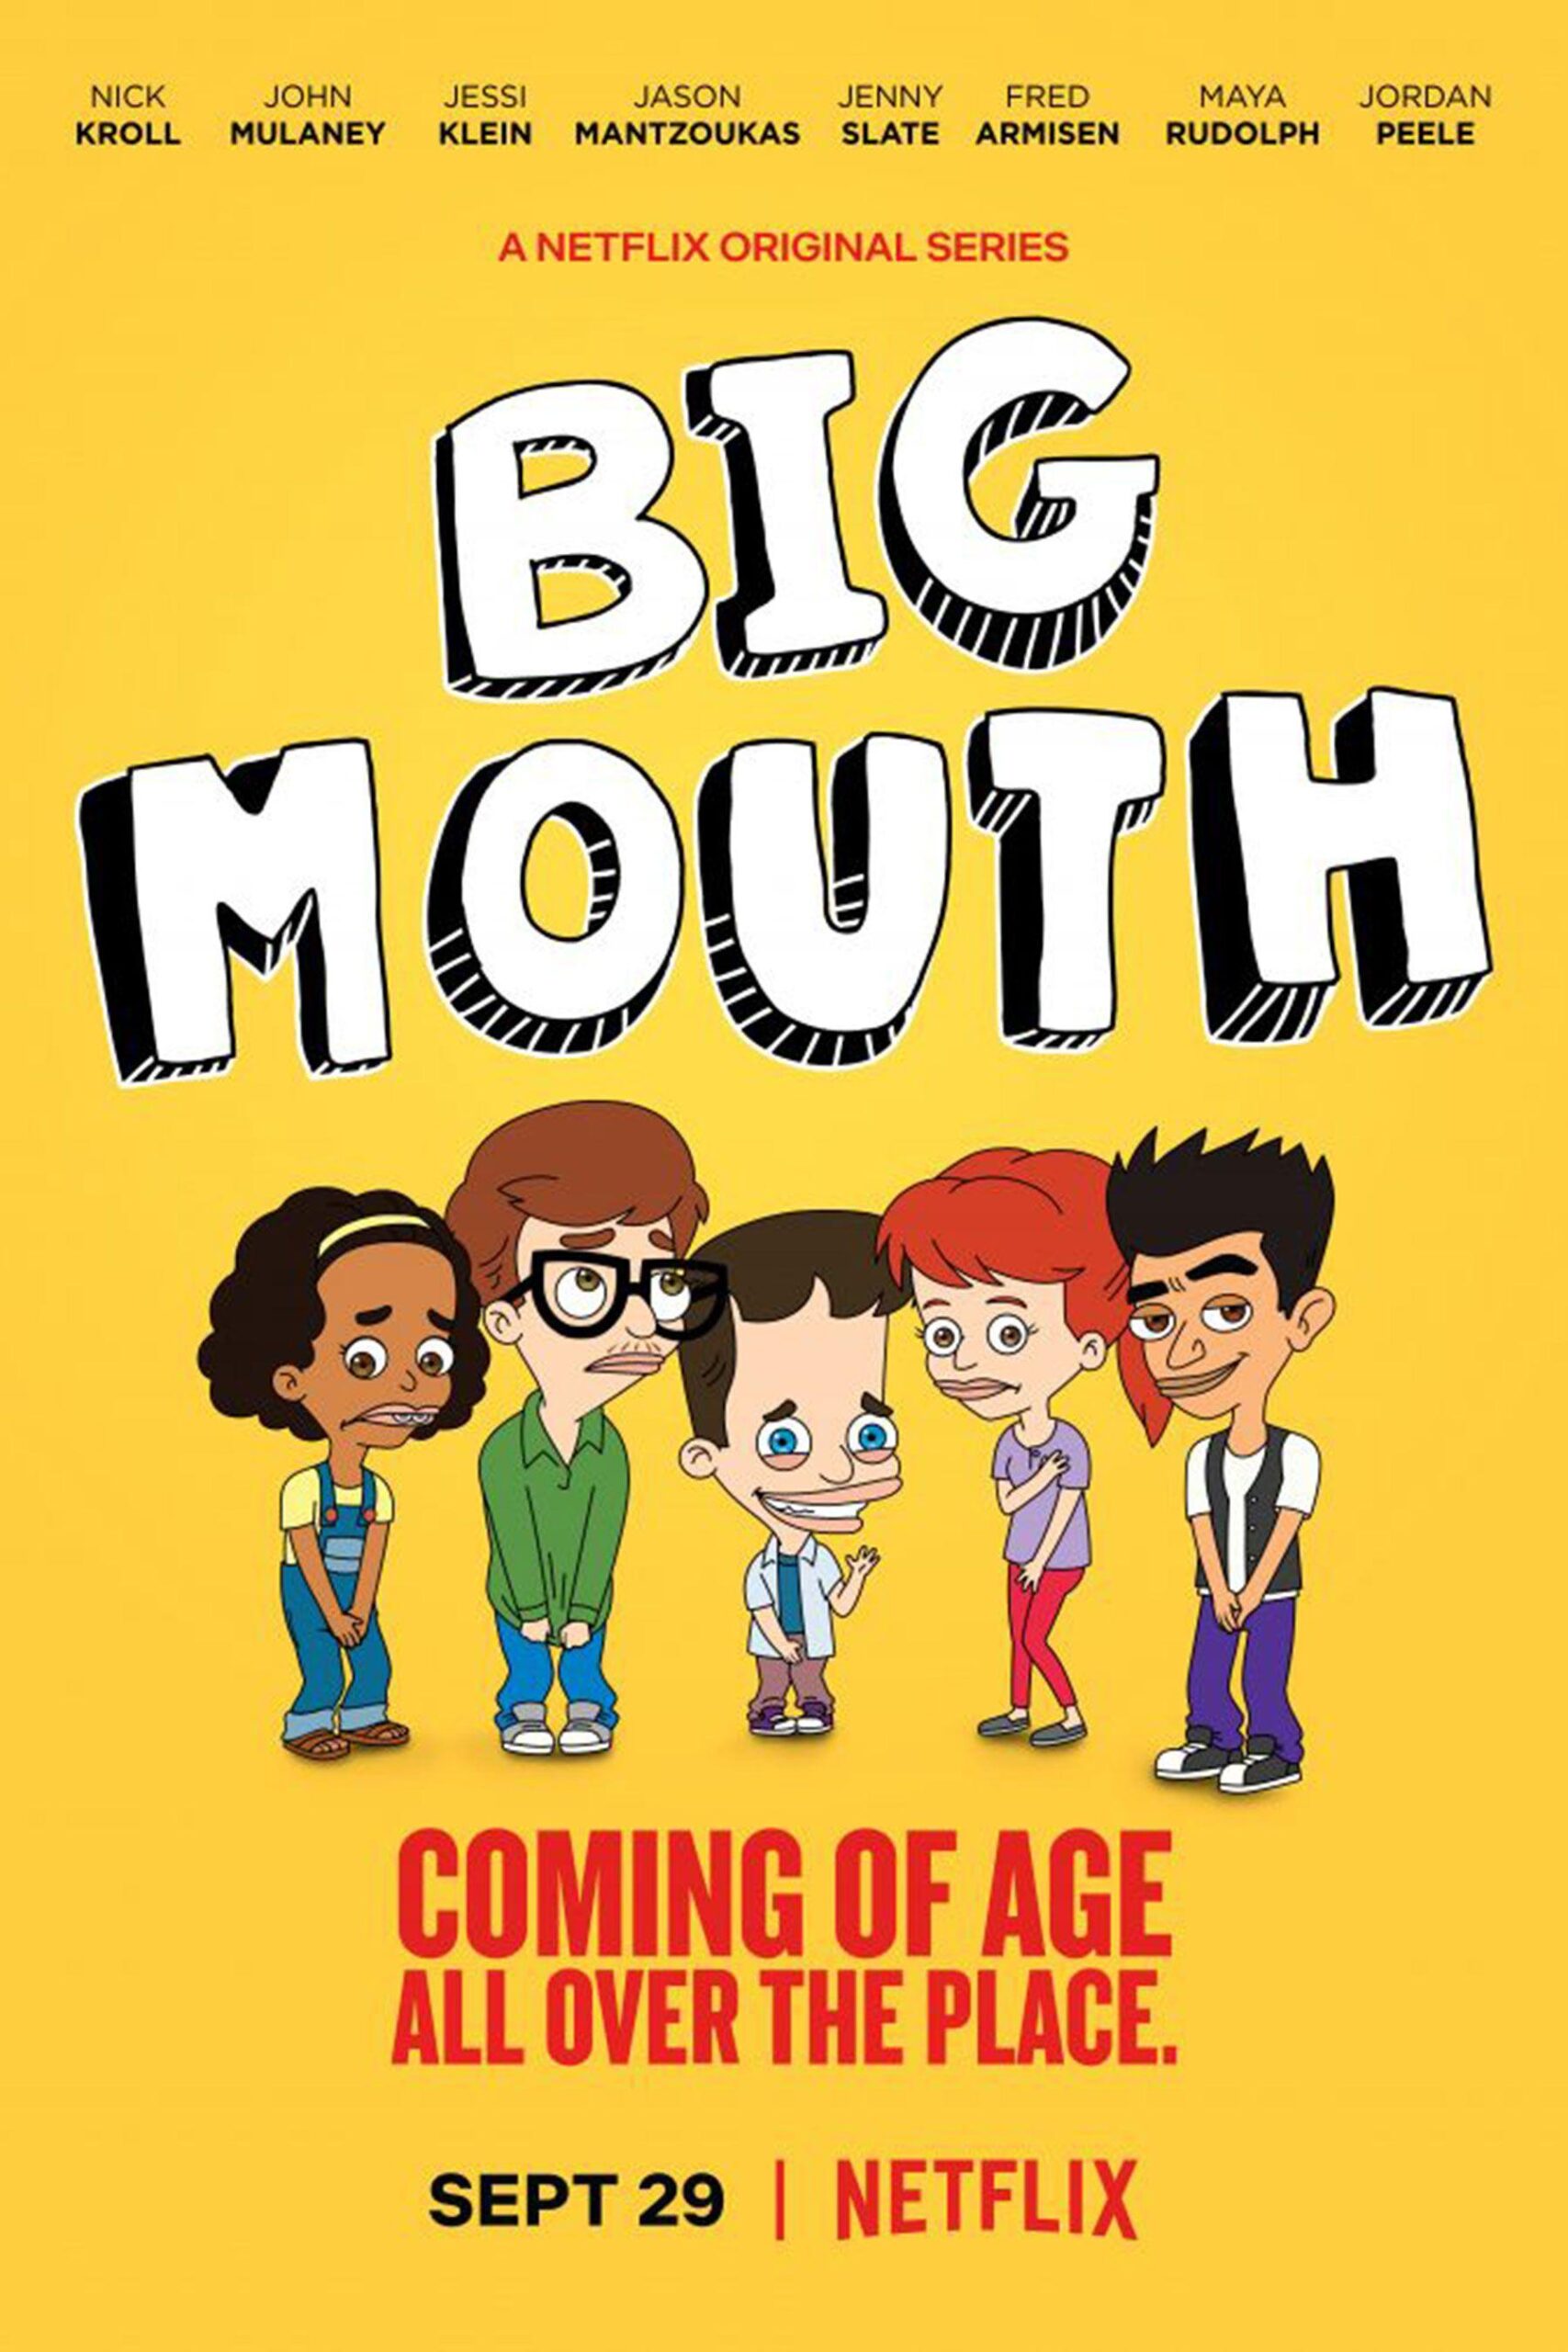 Big Mouth Nick Kroll Netflix animated series debuts teasers